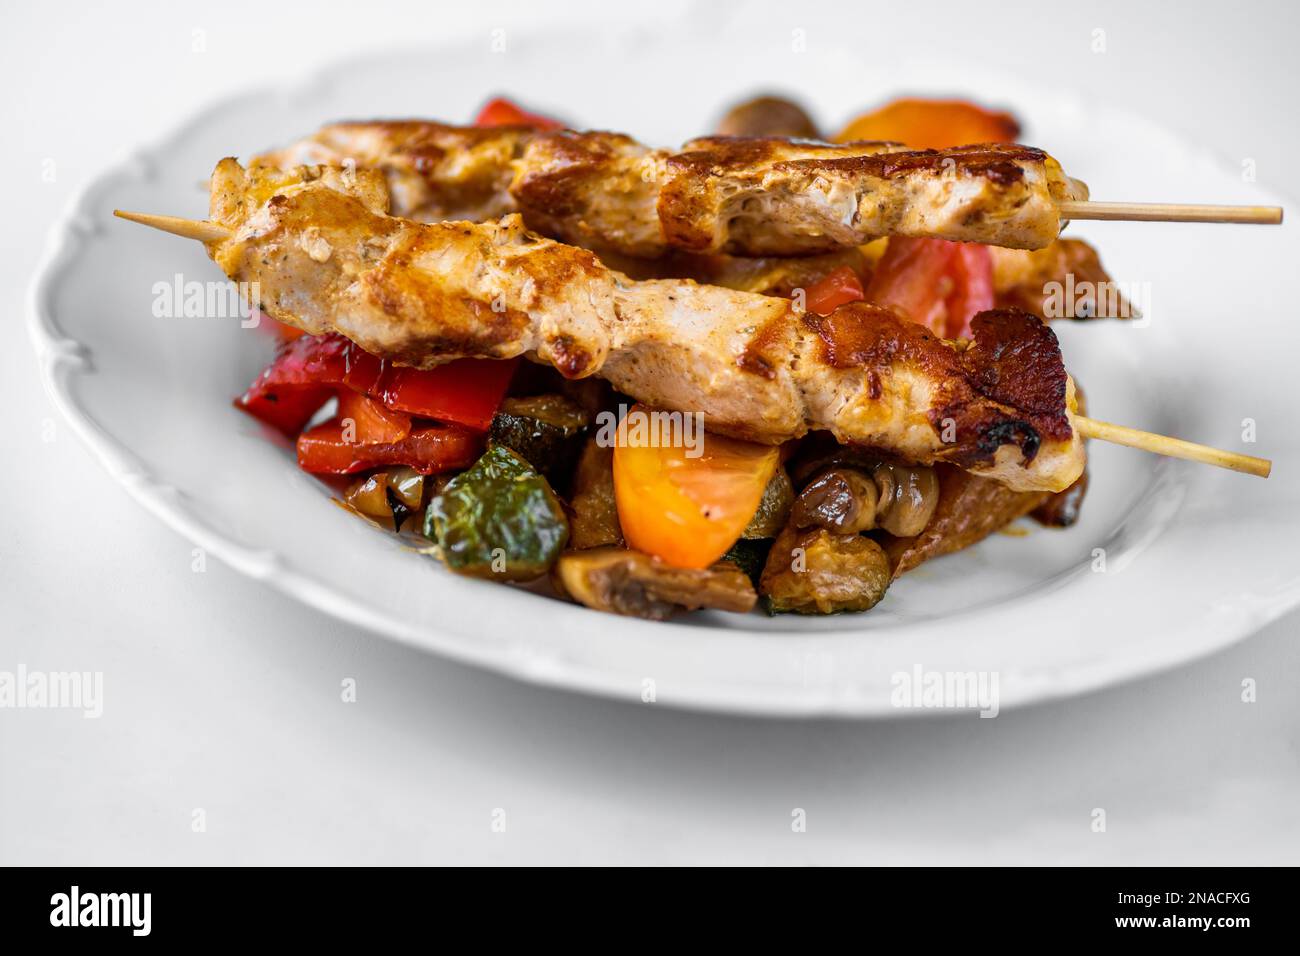 Pork meat on skewer (souvlaki) on baked juicy vegetable. Delicious greek lunch or dinner, closeup. Stock Photo